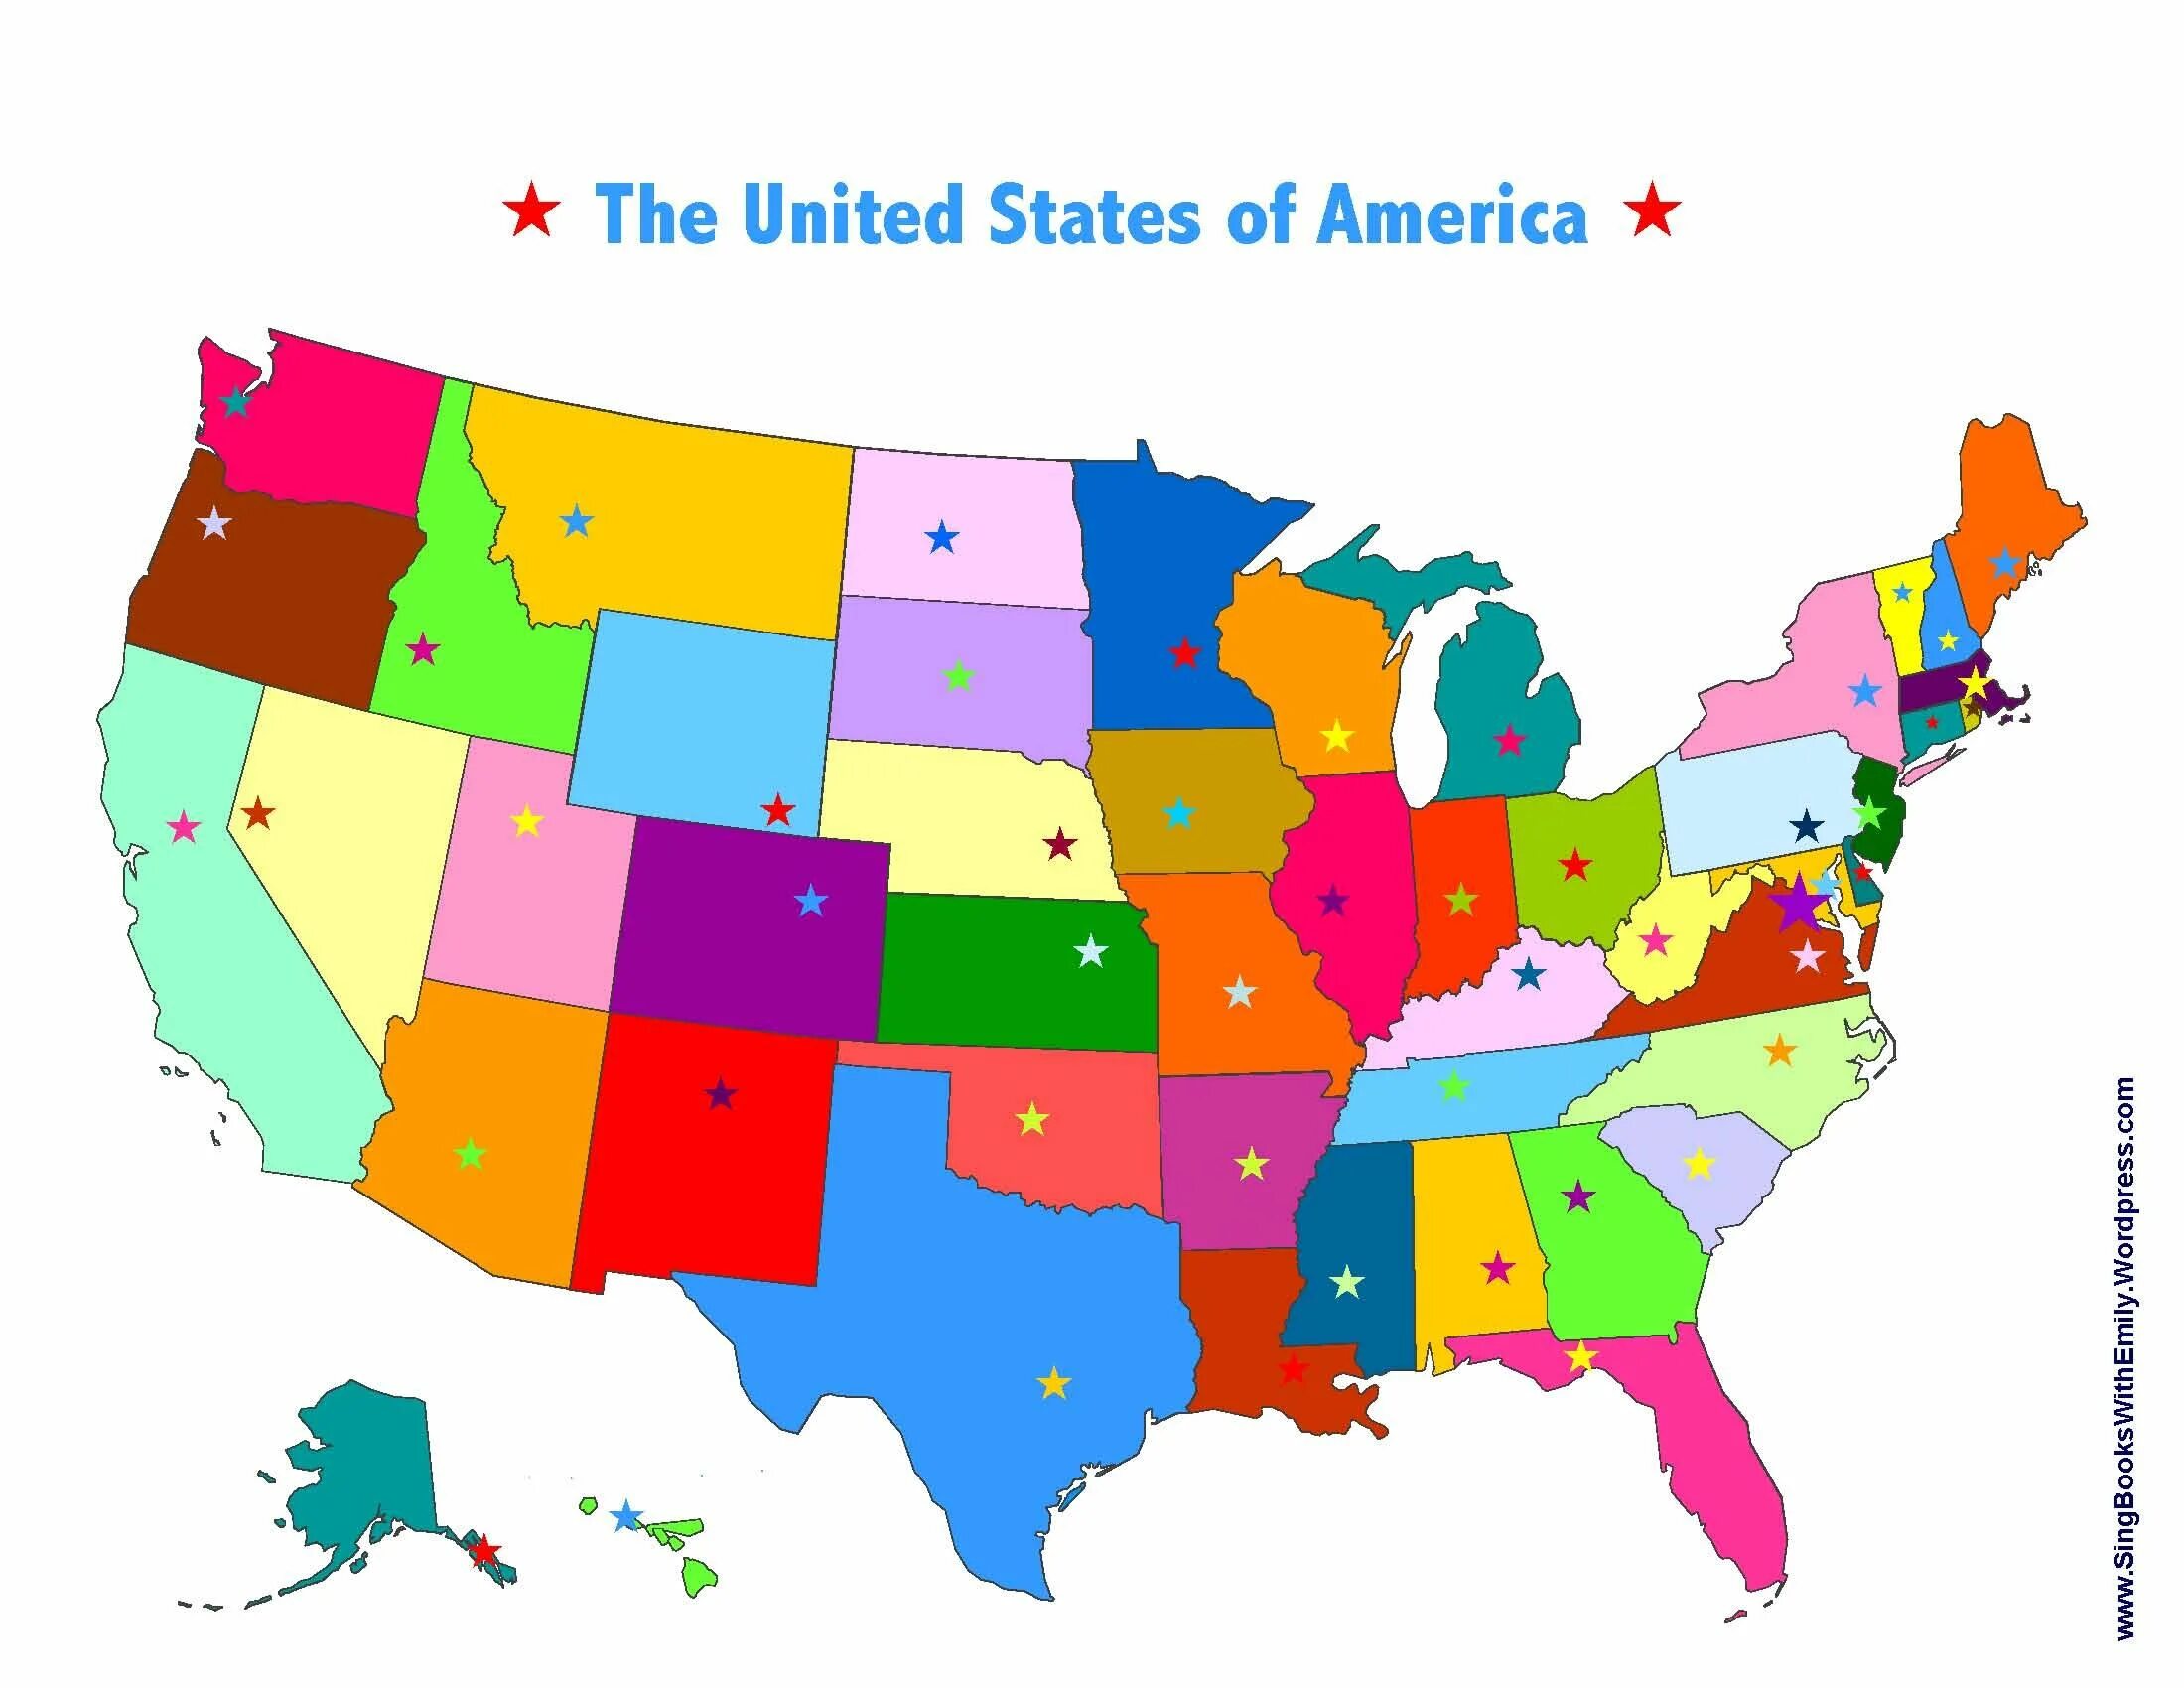 1970 год символ штата сша. The United States of America карта. USA States Map. USA 50 States. USA States and Capitals Map.